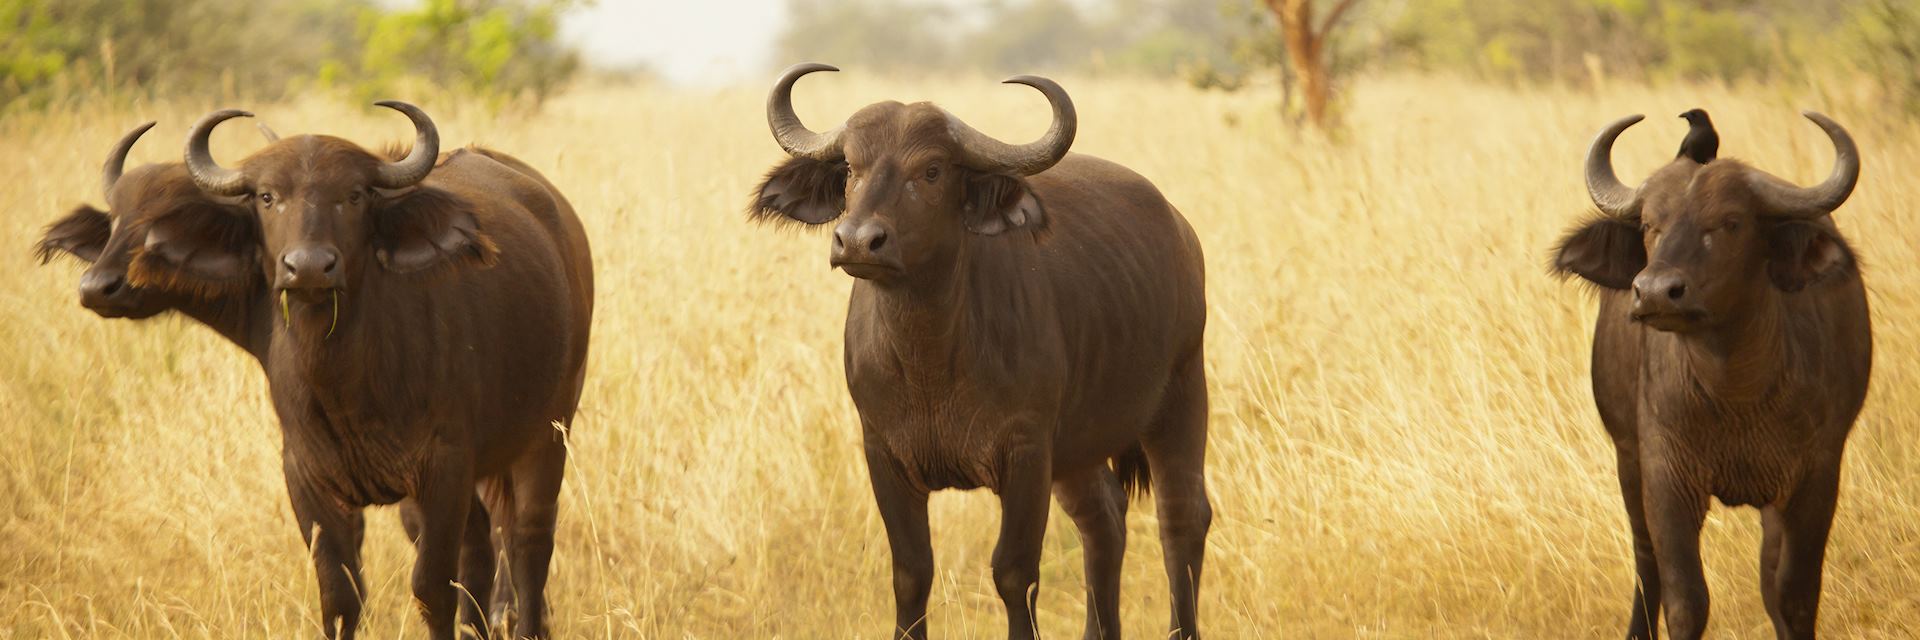 Cape buffalo, Murchison Falls National Park